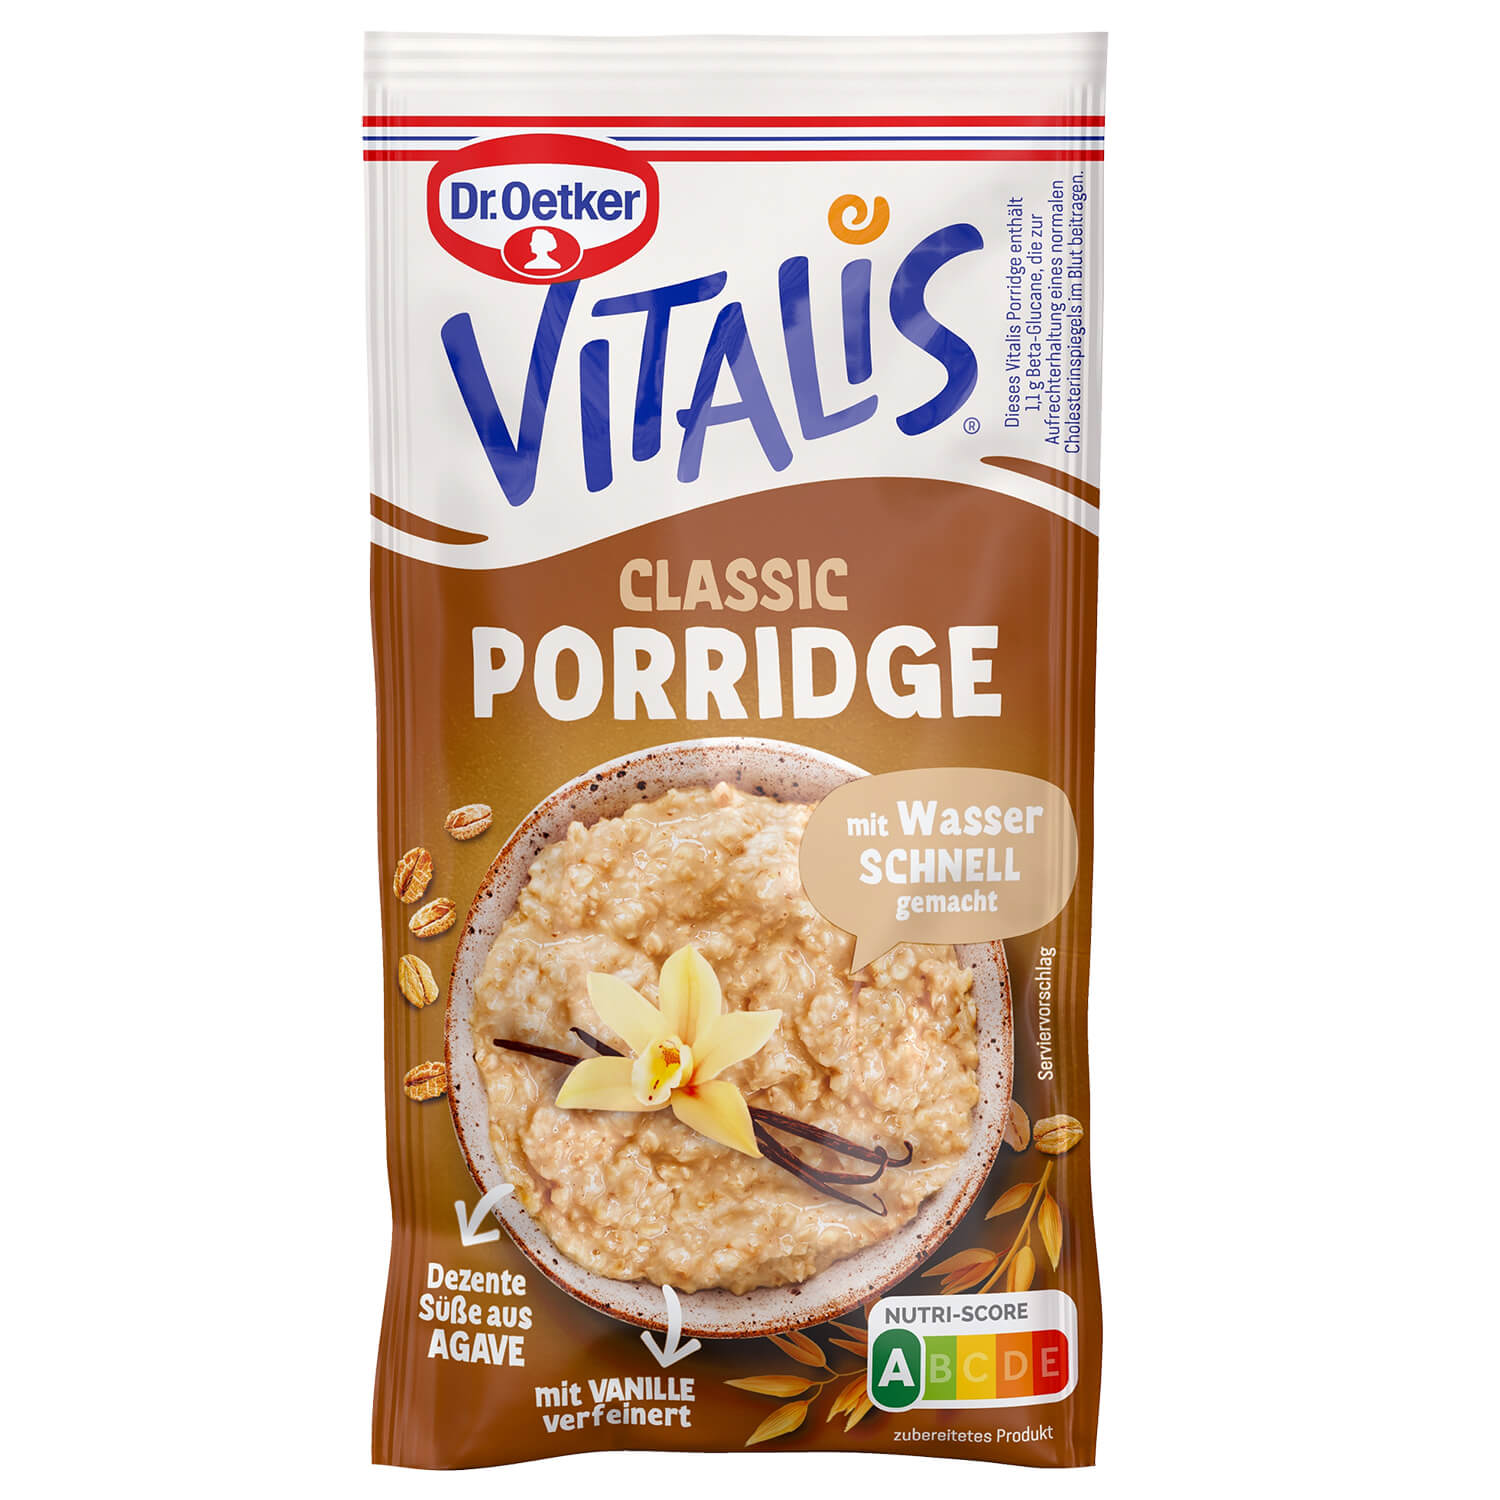 Dr. Oetker Vitalis Porridge Classic 58g Beutel